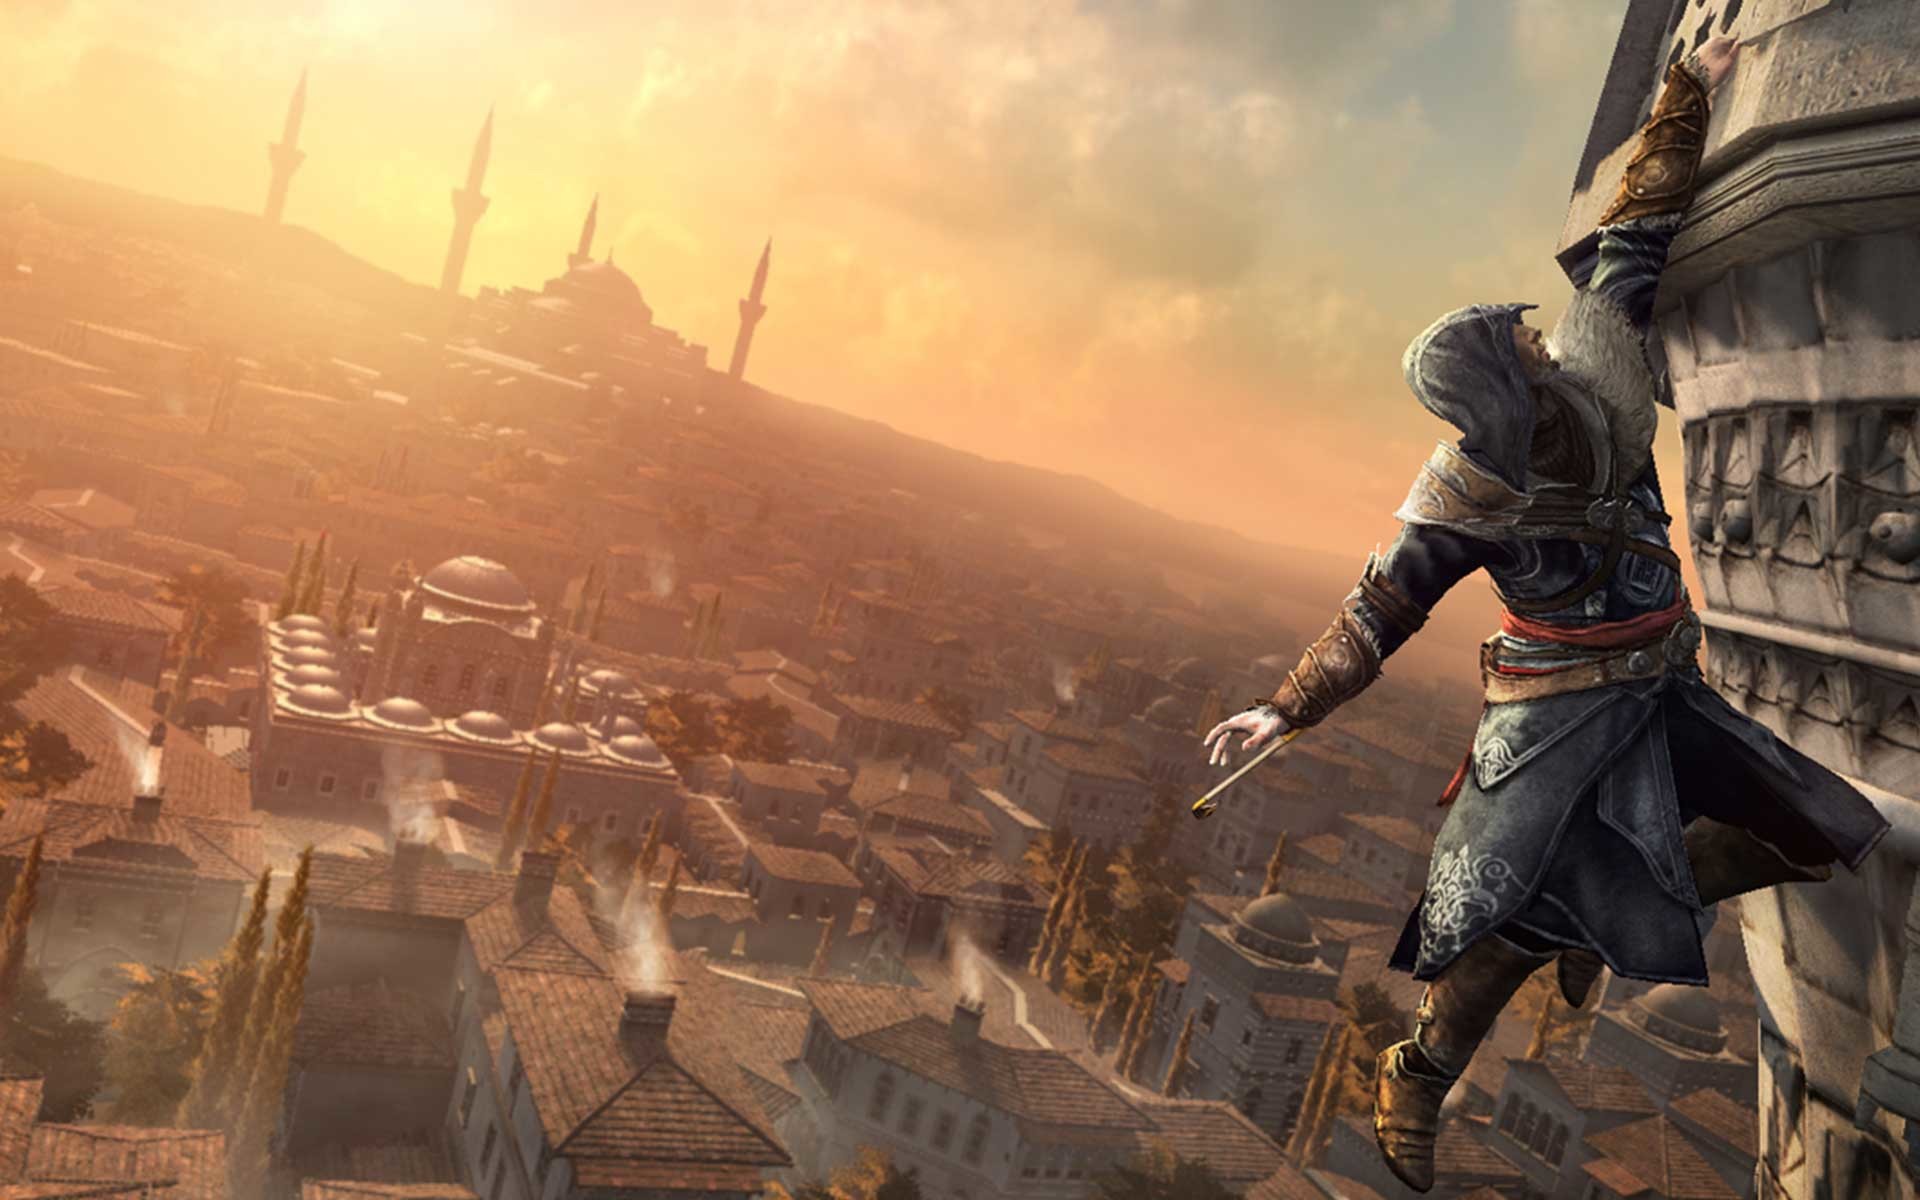 Rule 3 4 games. Ассасин Крид ревелатионс. Assassin's Creed: Revelations. Ассасин Крид 2 ревелетион. Ассасин Крид Откровение.